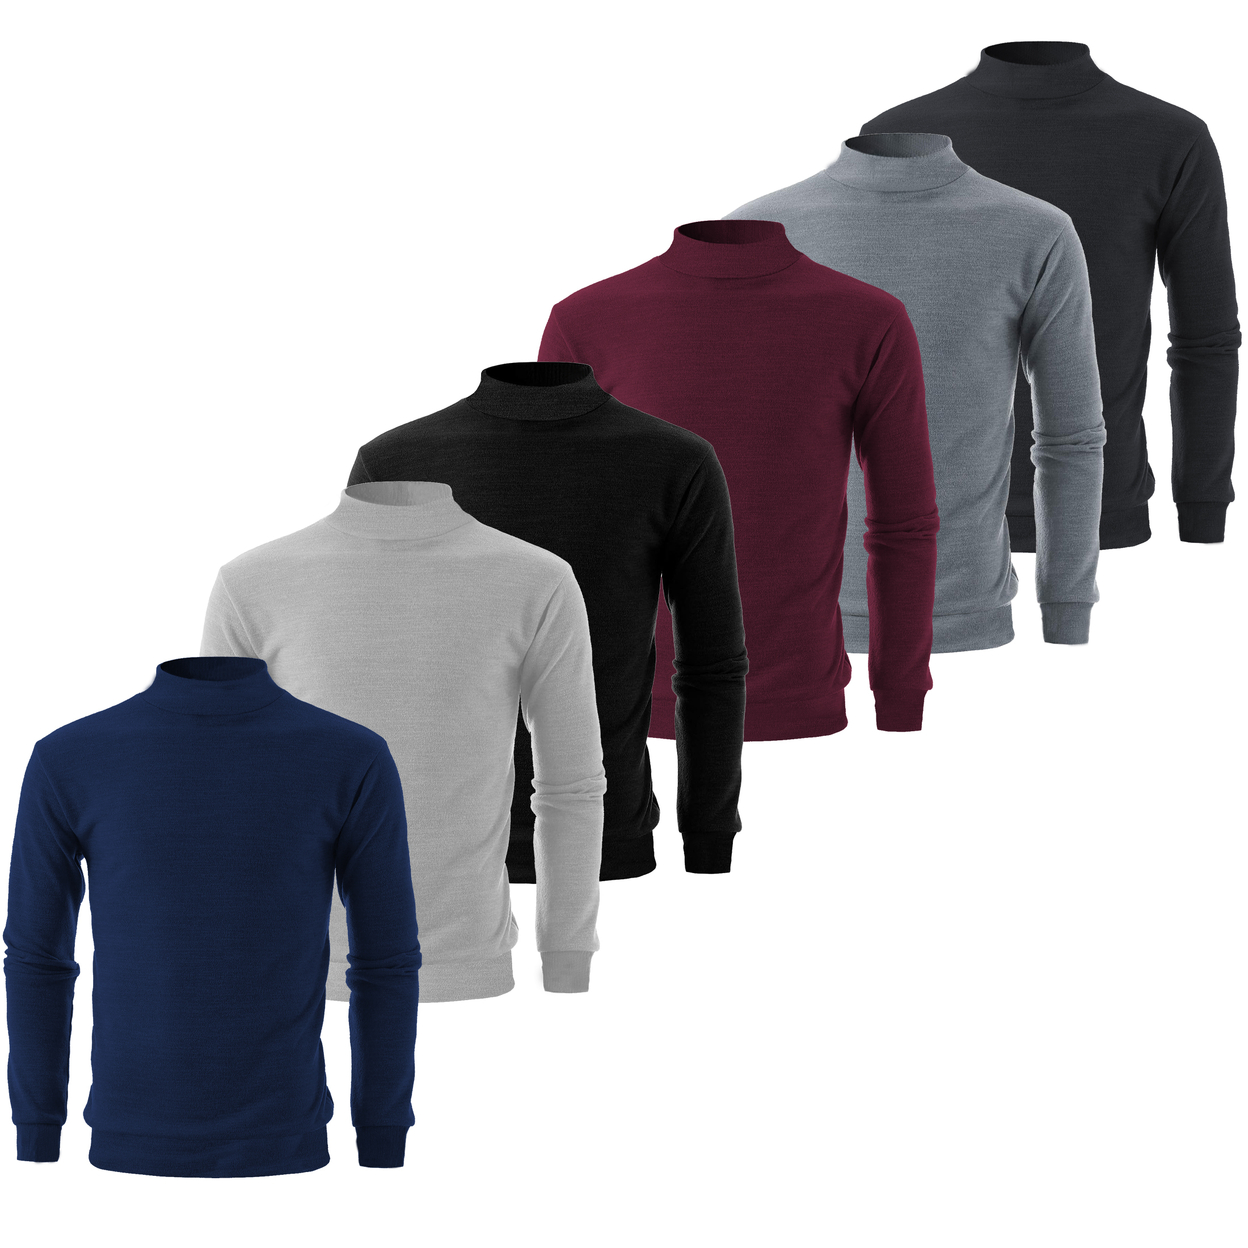 Men's Winter Warm Cozy Knit Slim-Fit Mock Neck Sweater - Grey, Small